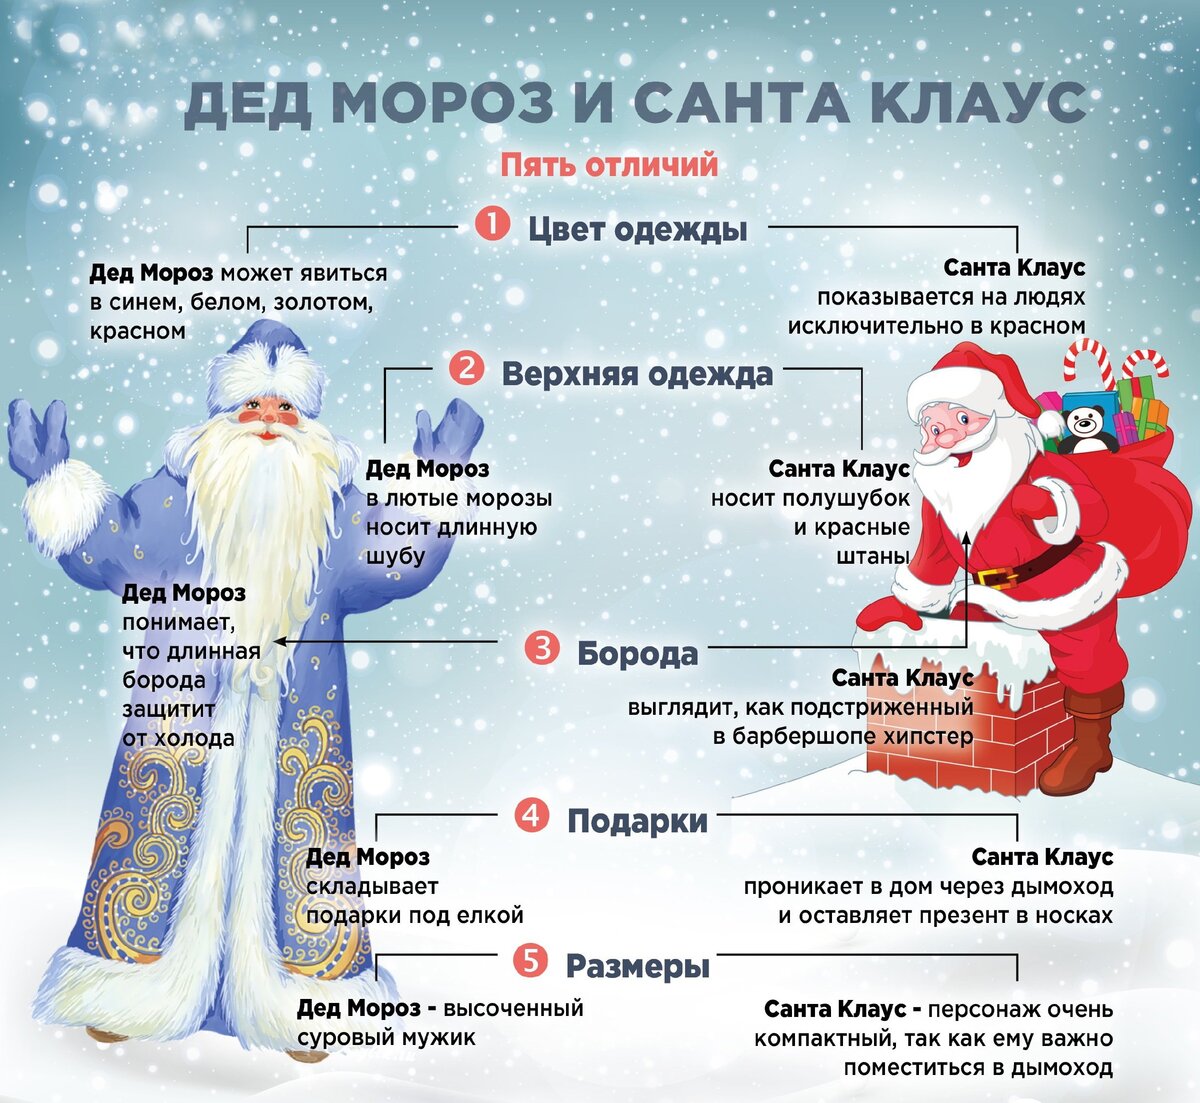 Мороз почему о. Различия Деда Мороза и Санта Клауса. Различия между дедом Морозом и Санта Клаусом. Дед Мороз и сантаелаус.